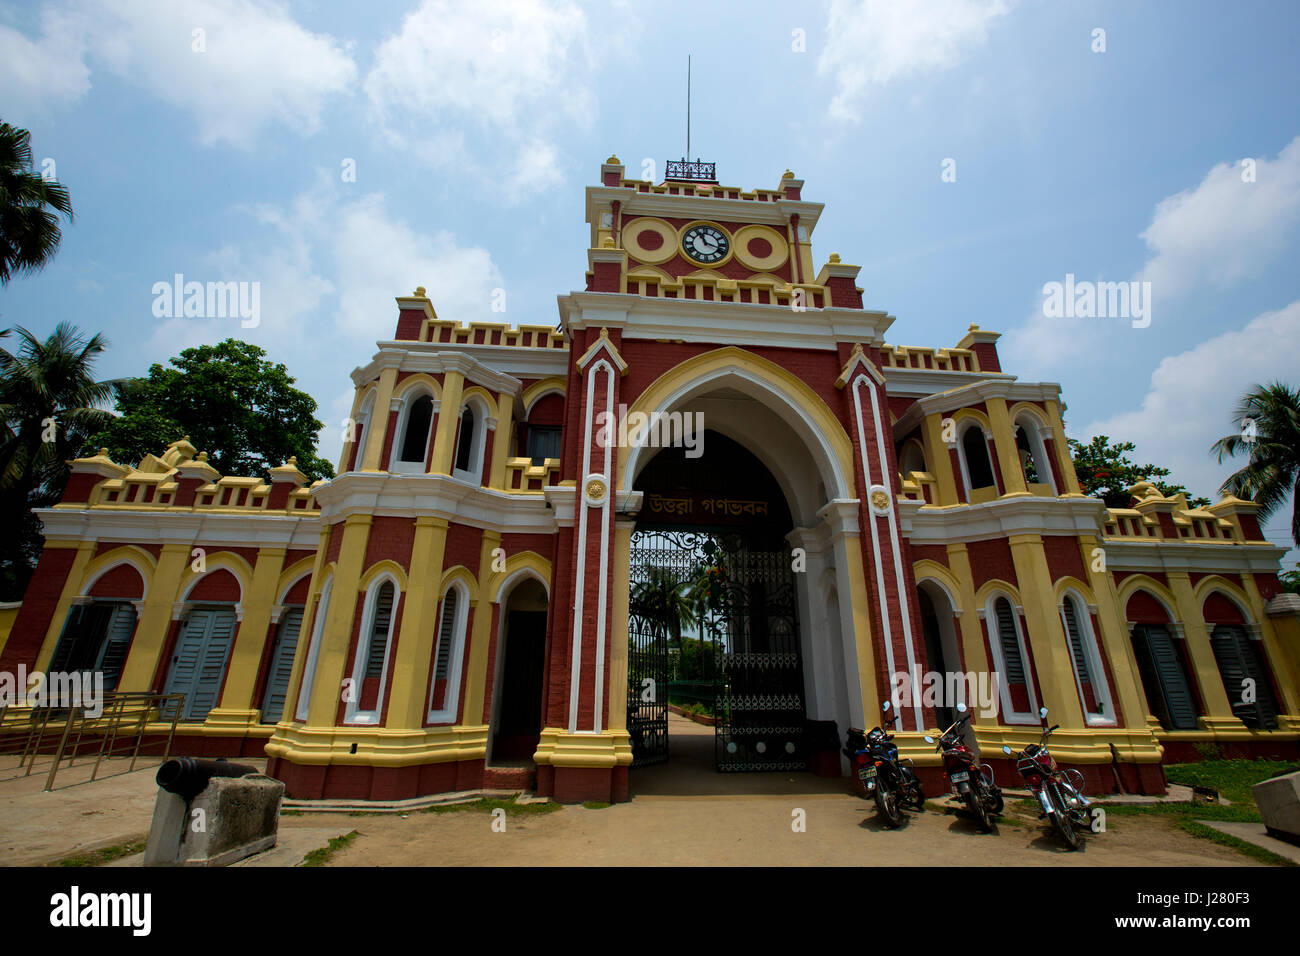 Entrance of the Uttara Gano Bhaban. Natore, Bangladesh. Stock Photo